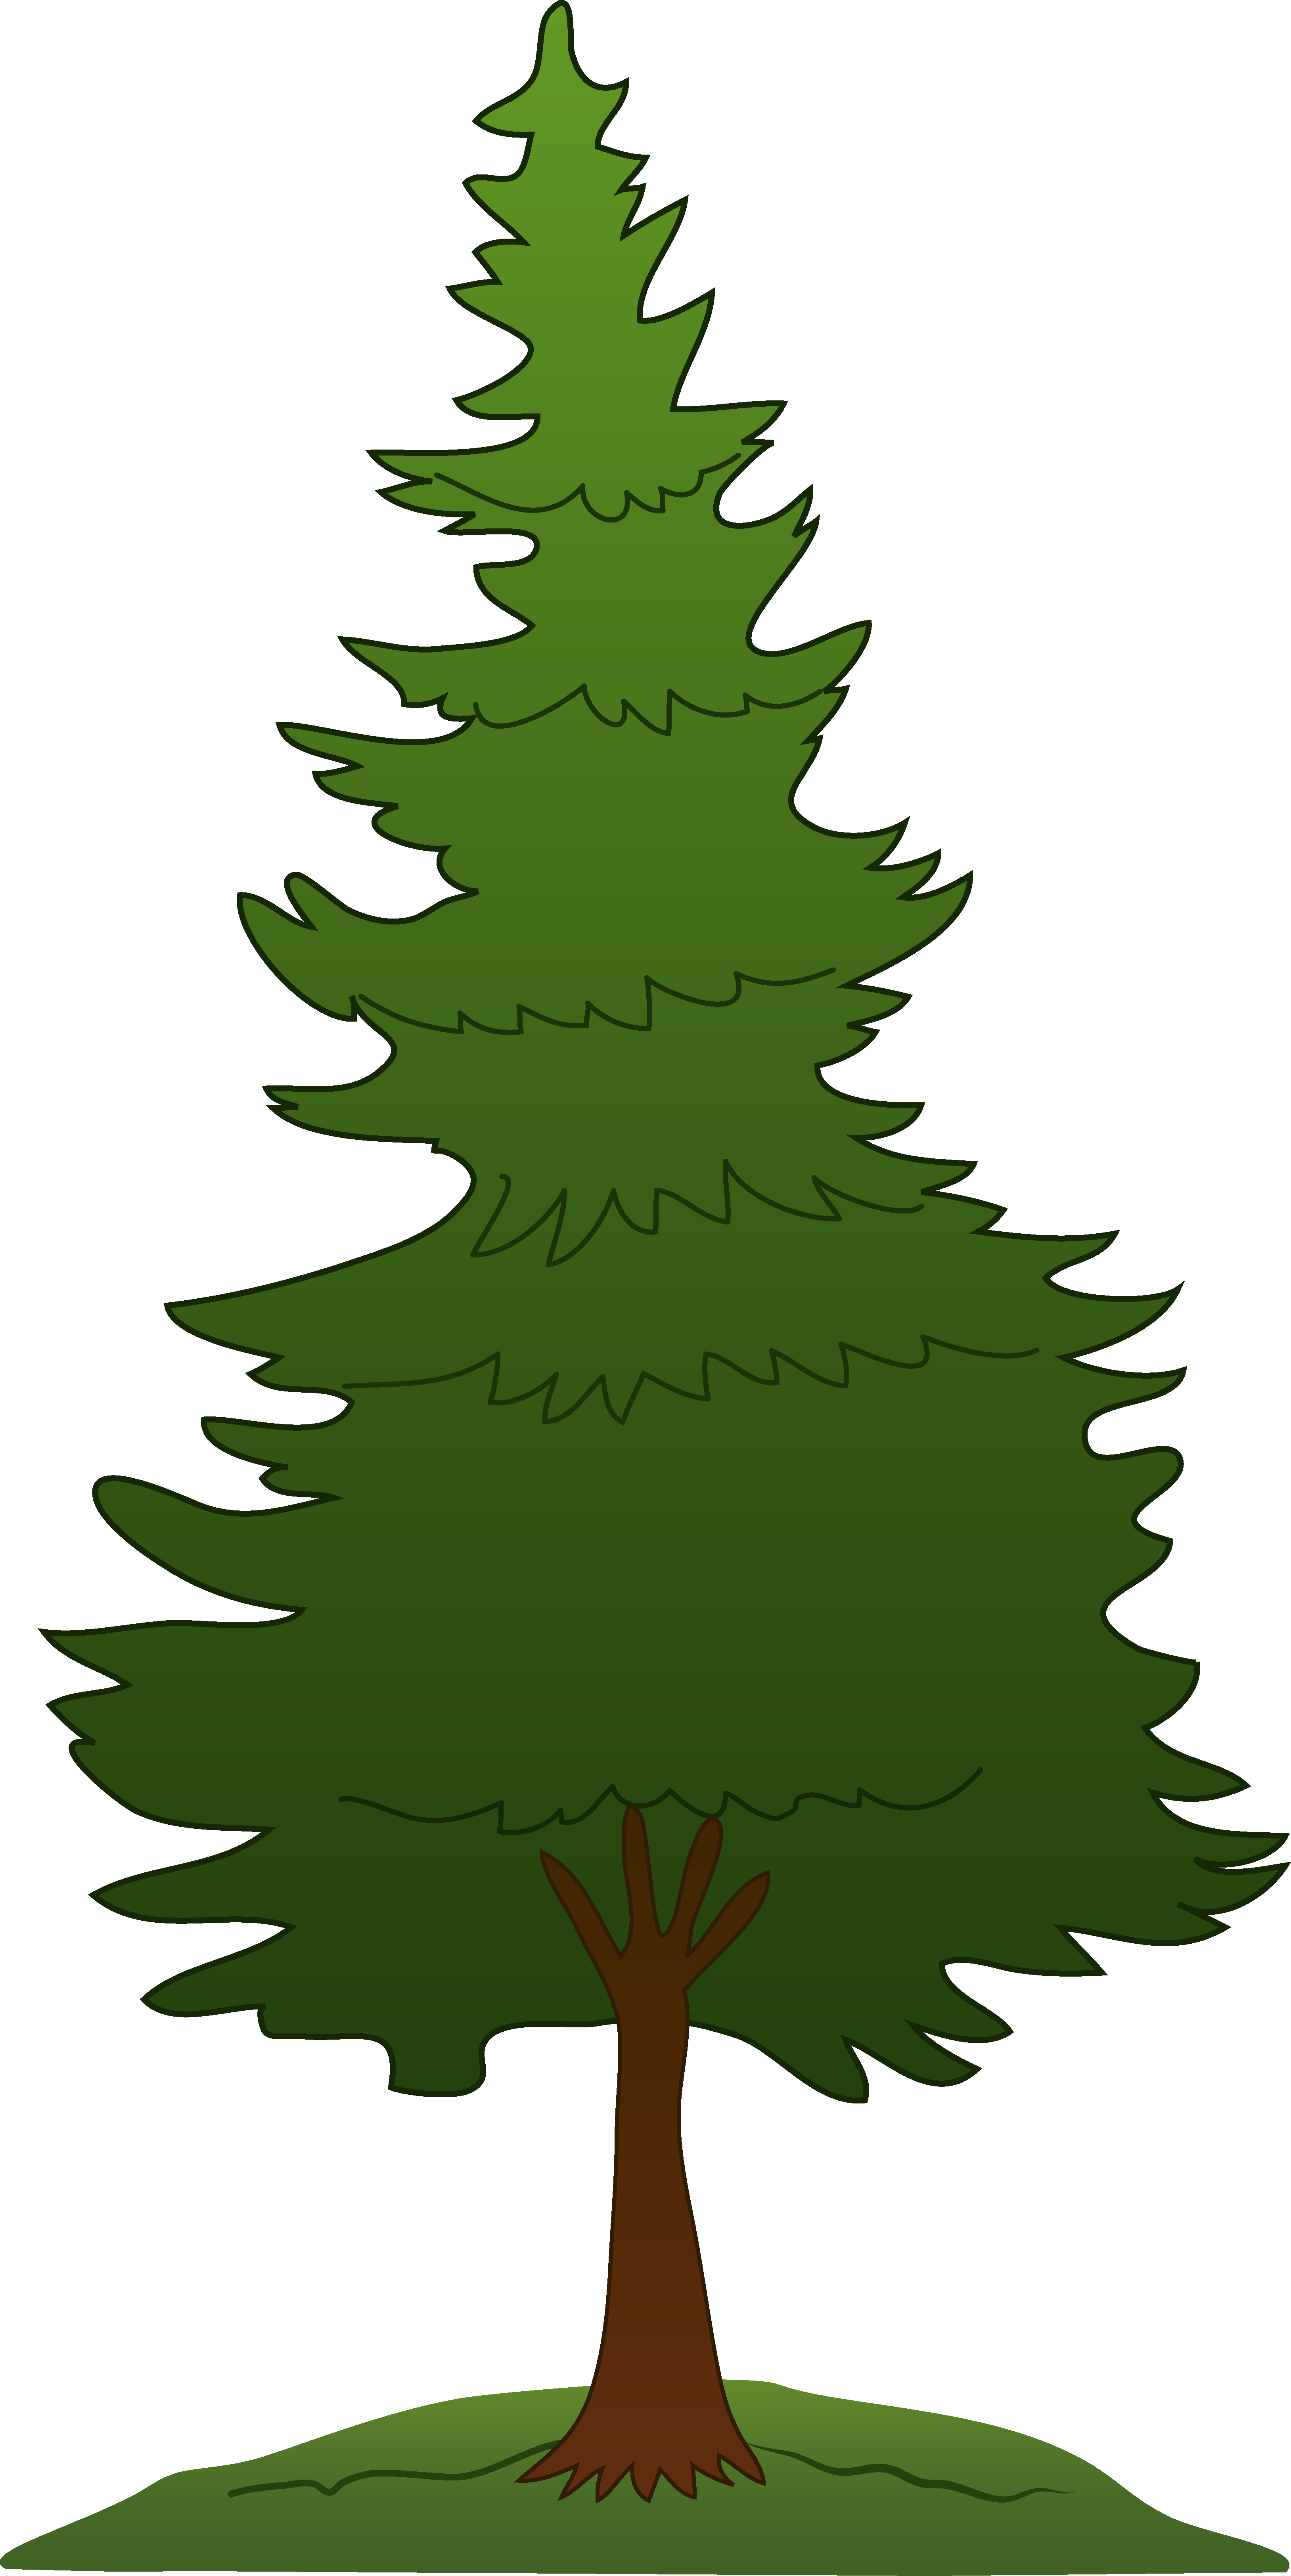 Pine tree logo clipart